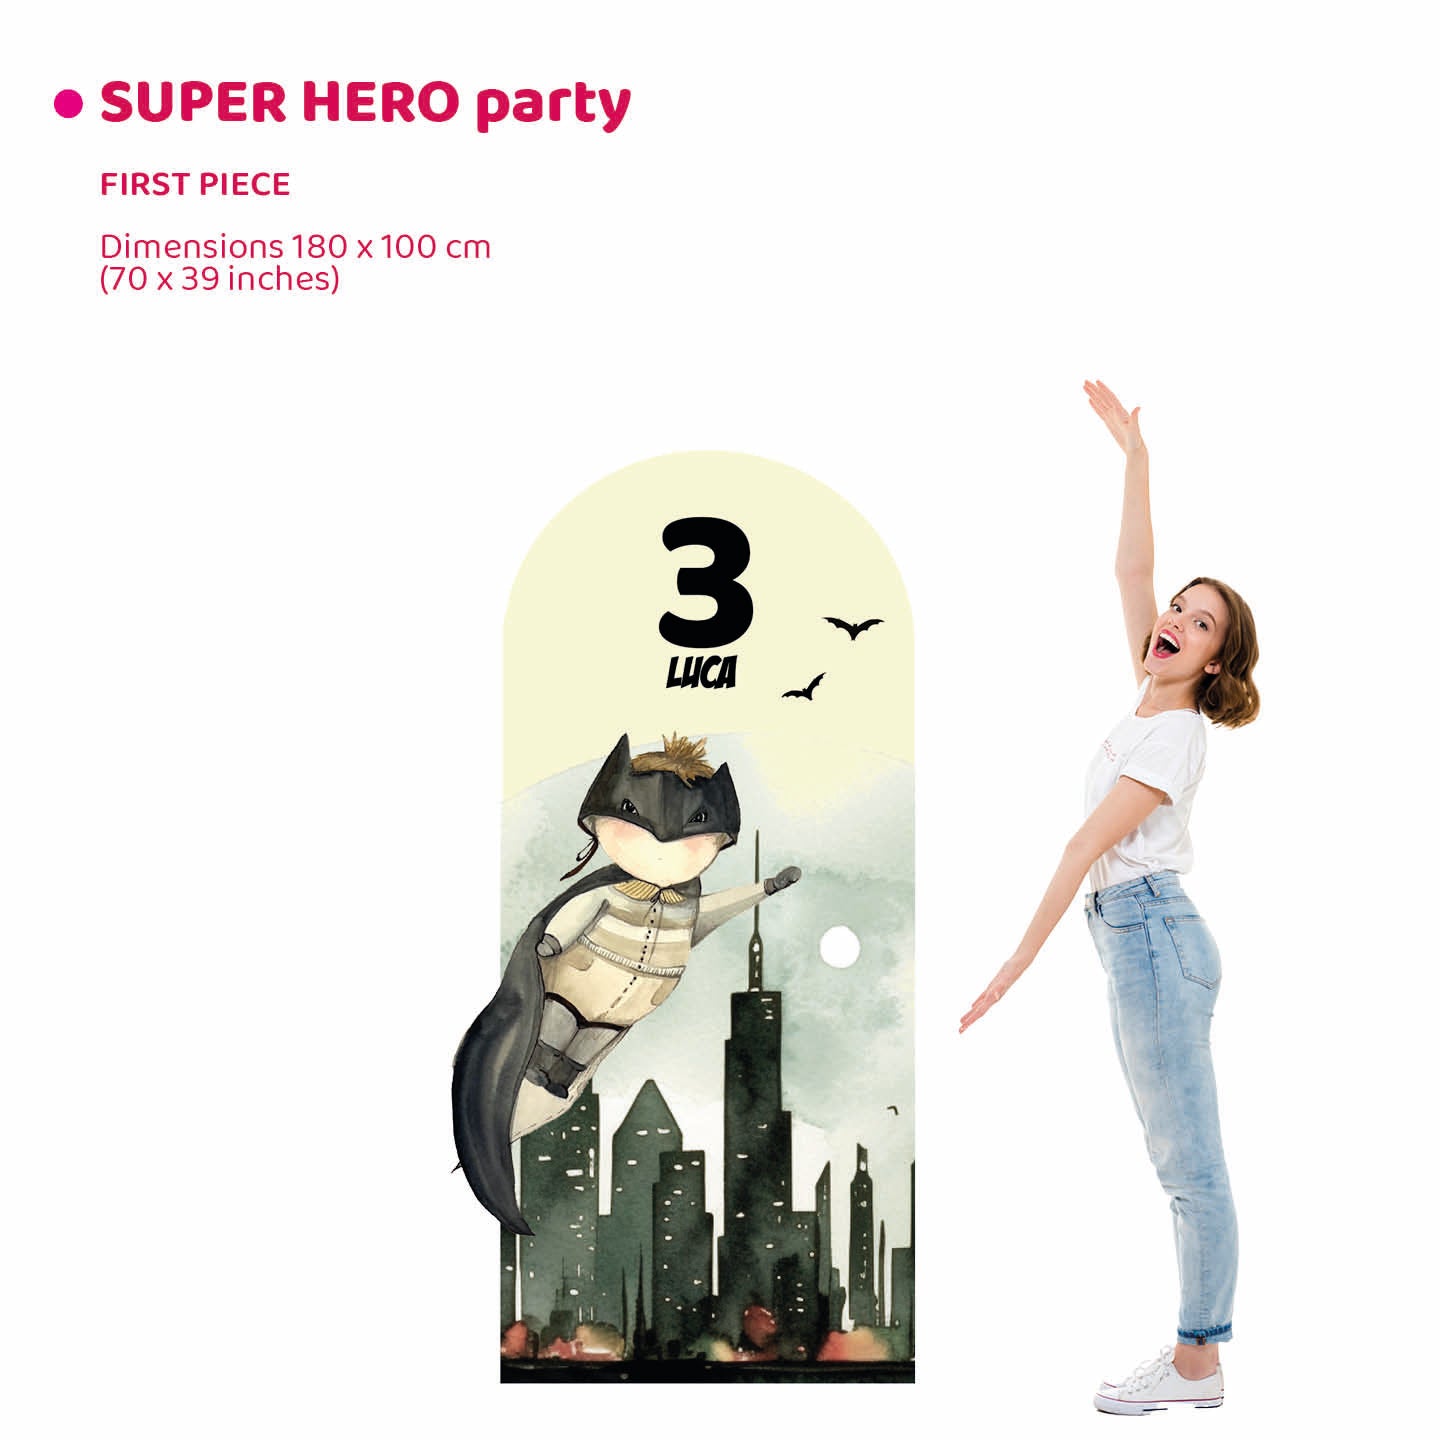 SUPER HERO PARTY da terra | Decori compleanno bimbo - Peekaboo